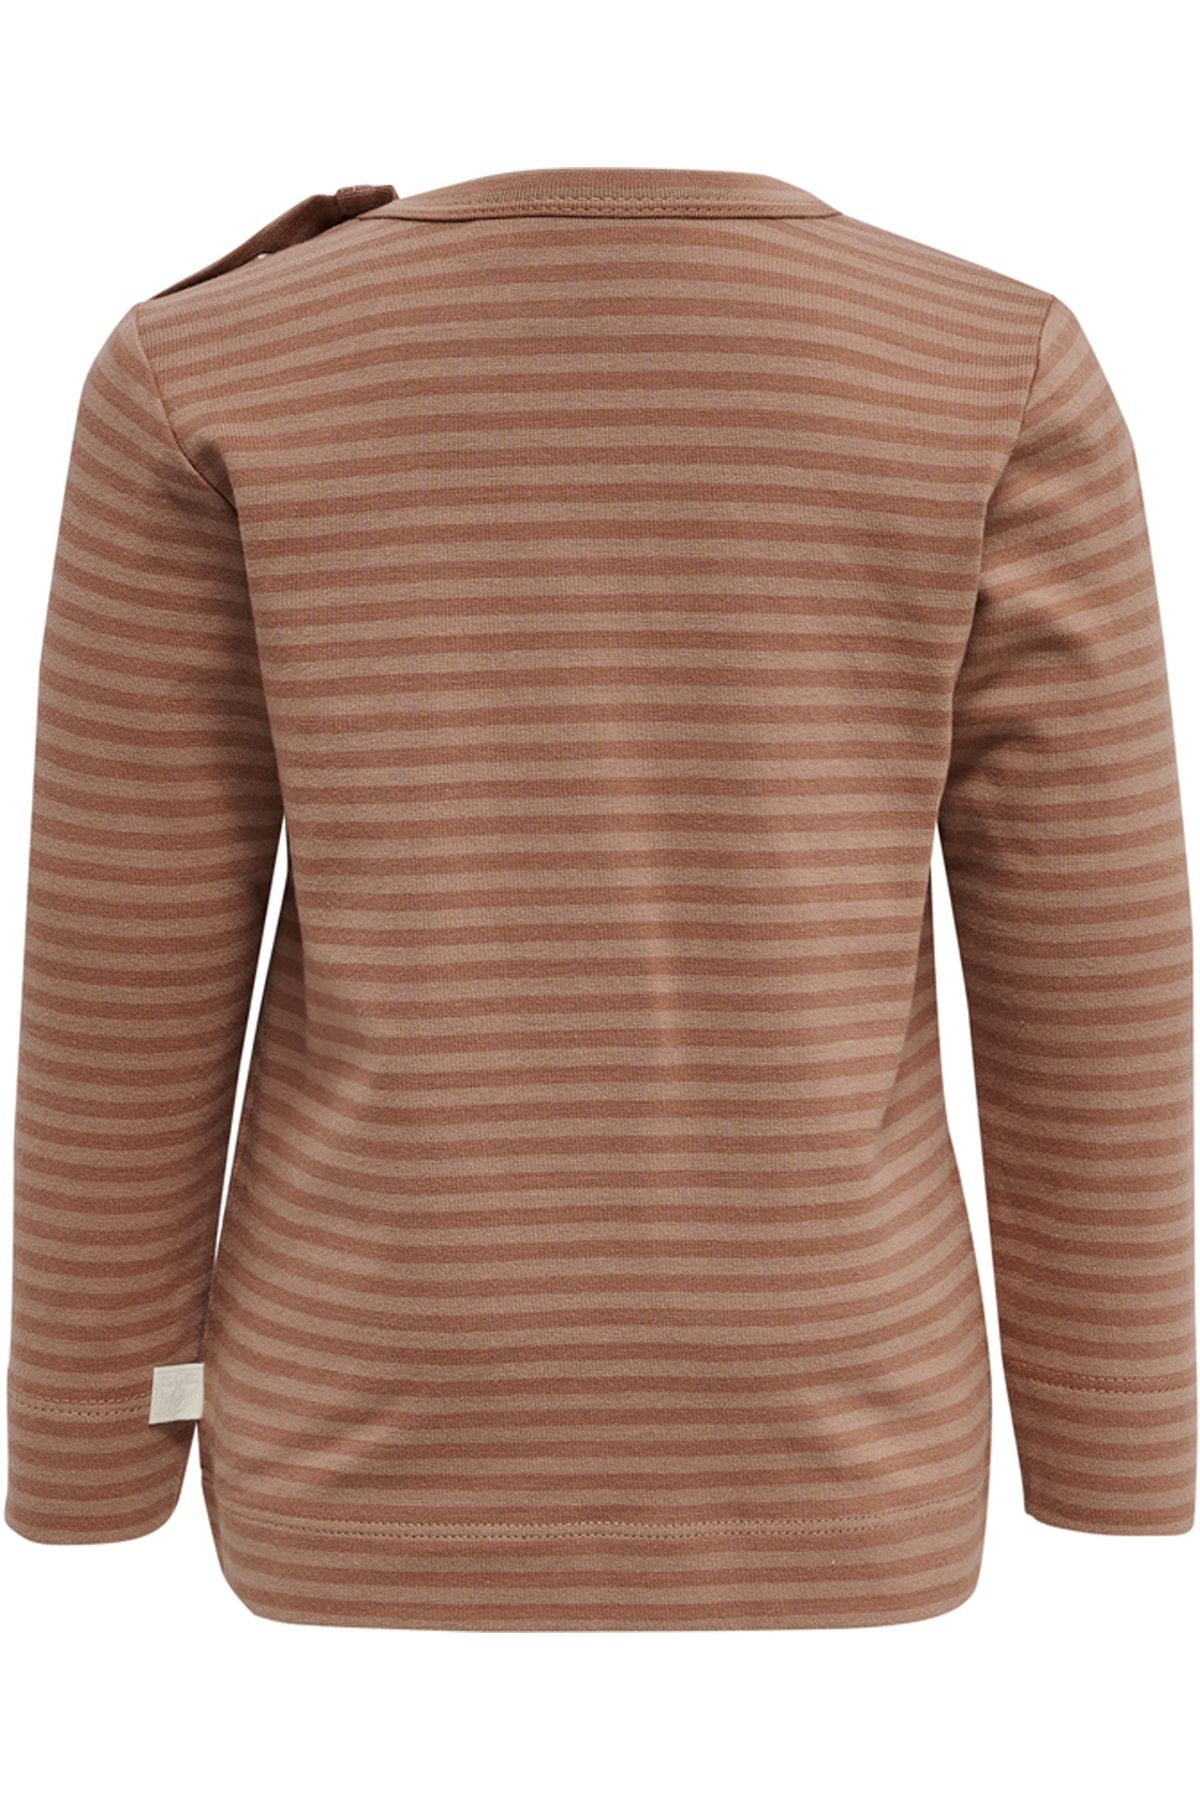 HUMMEL T-Shirt - Regular Trendyol - Fit - Braun